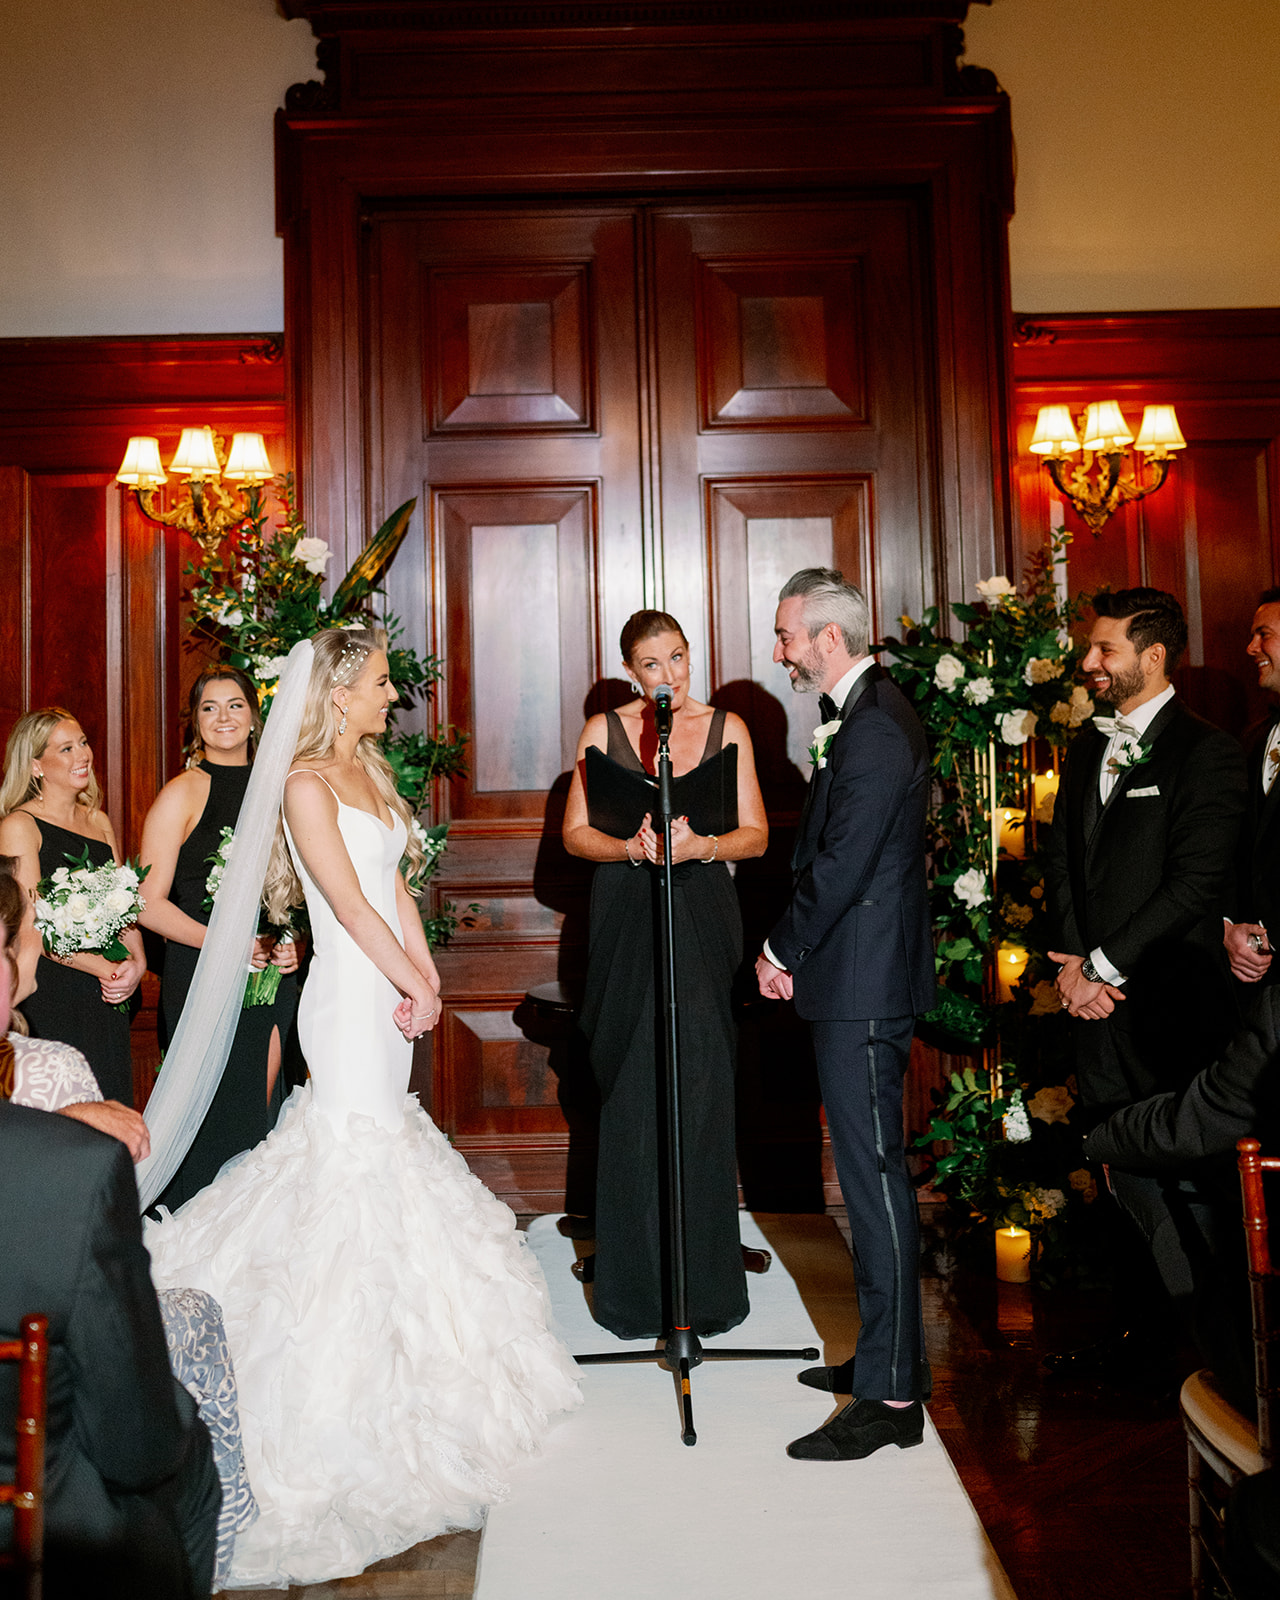 Indoor wedding ceremony at Bourne Mansion.